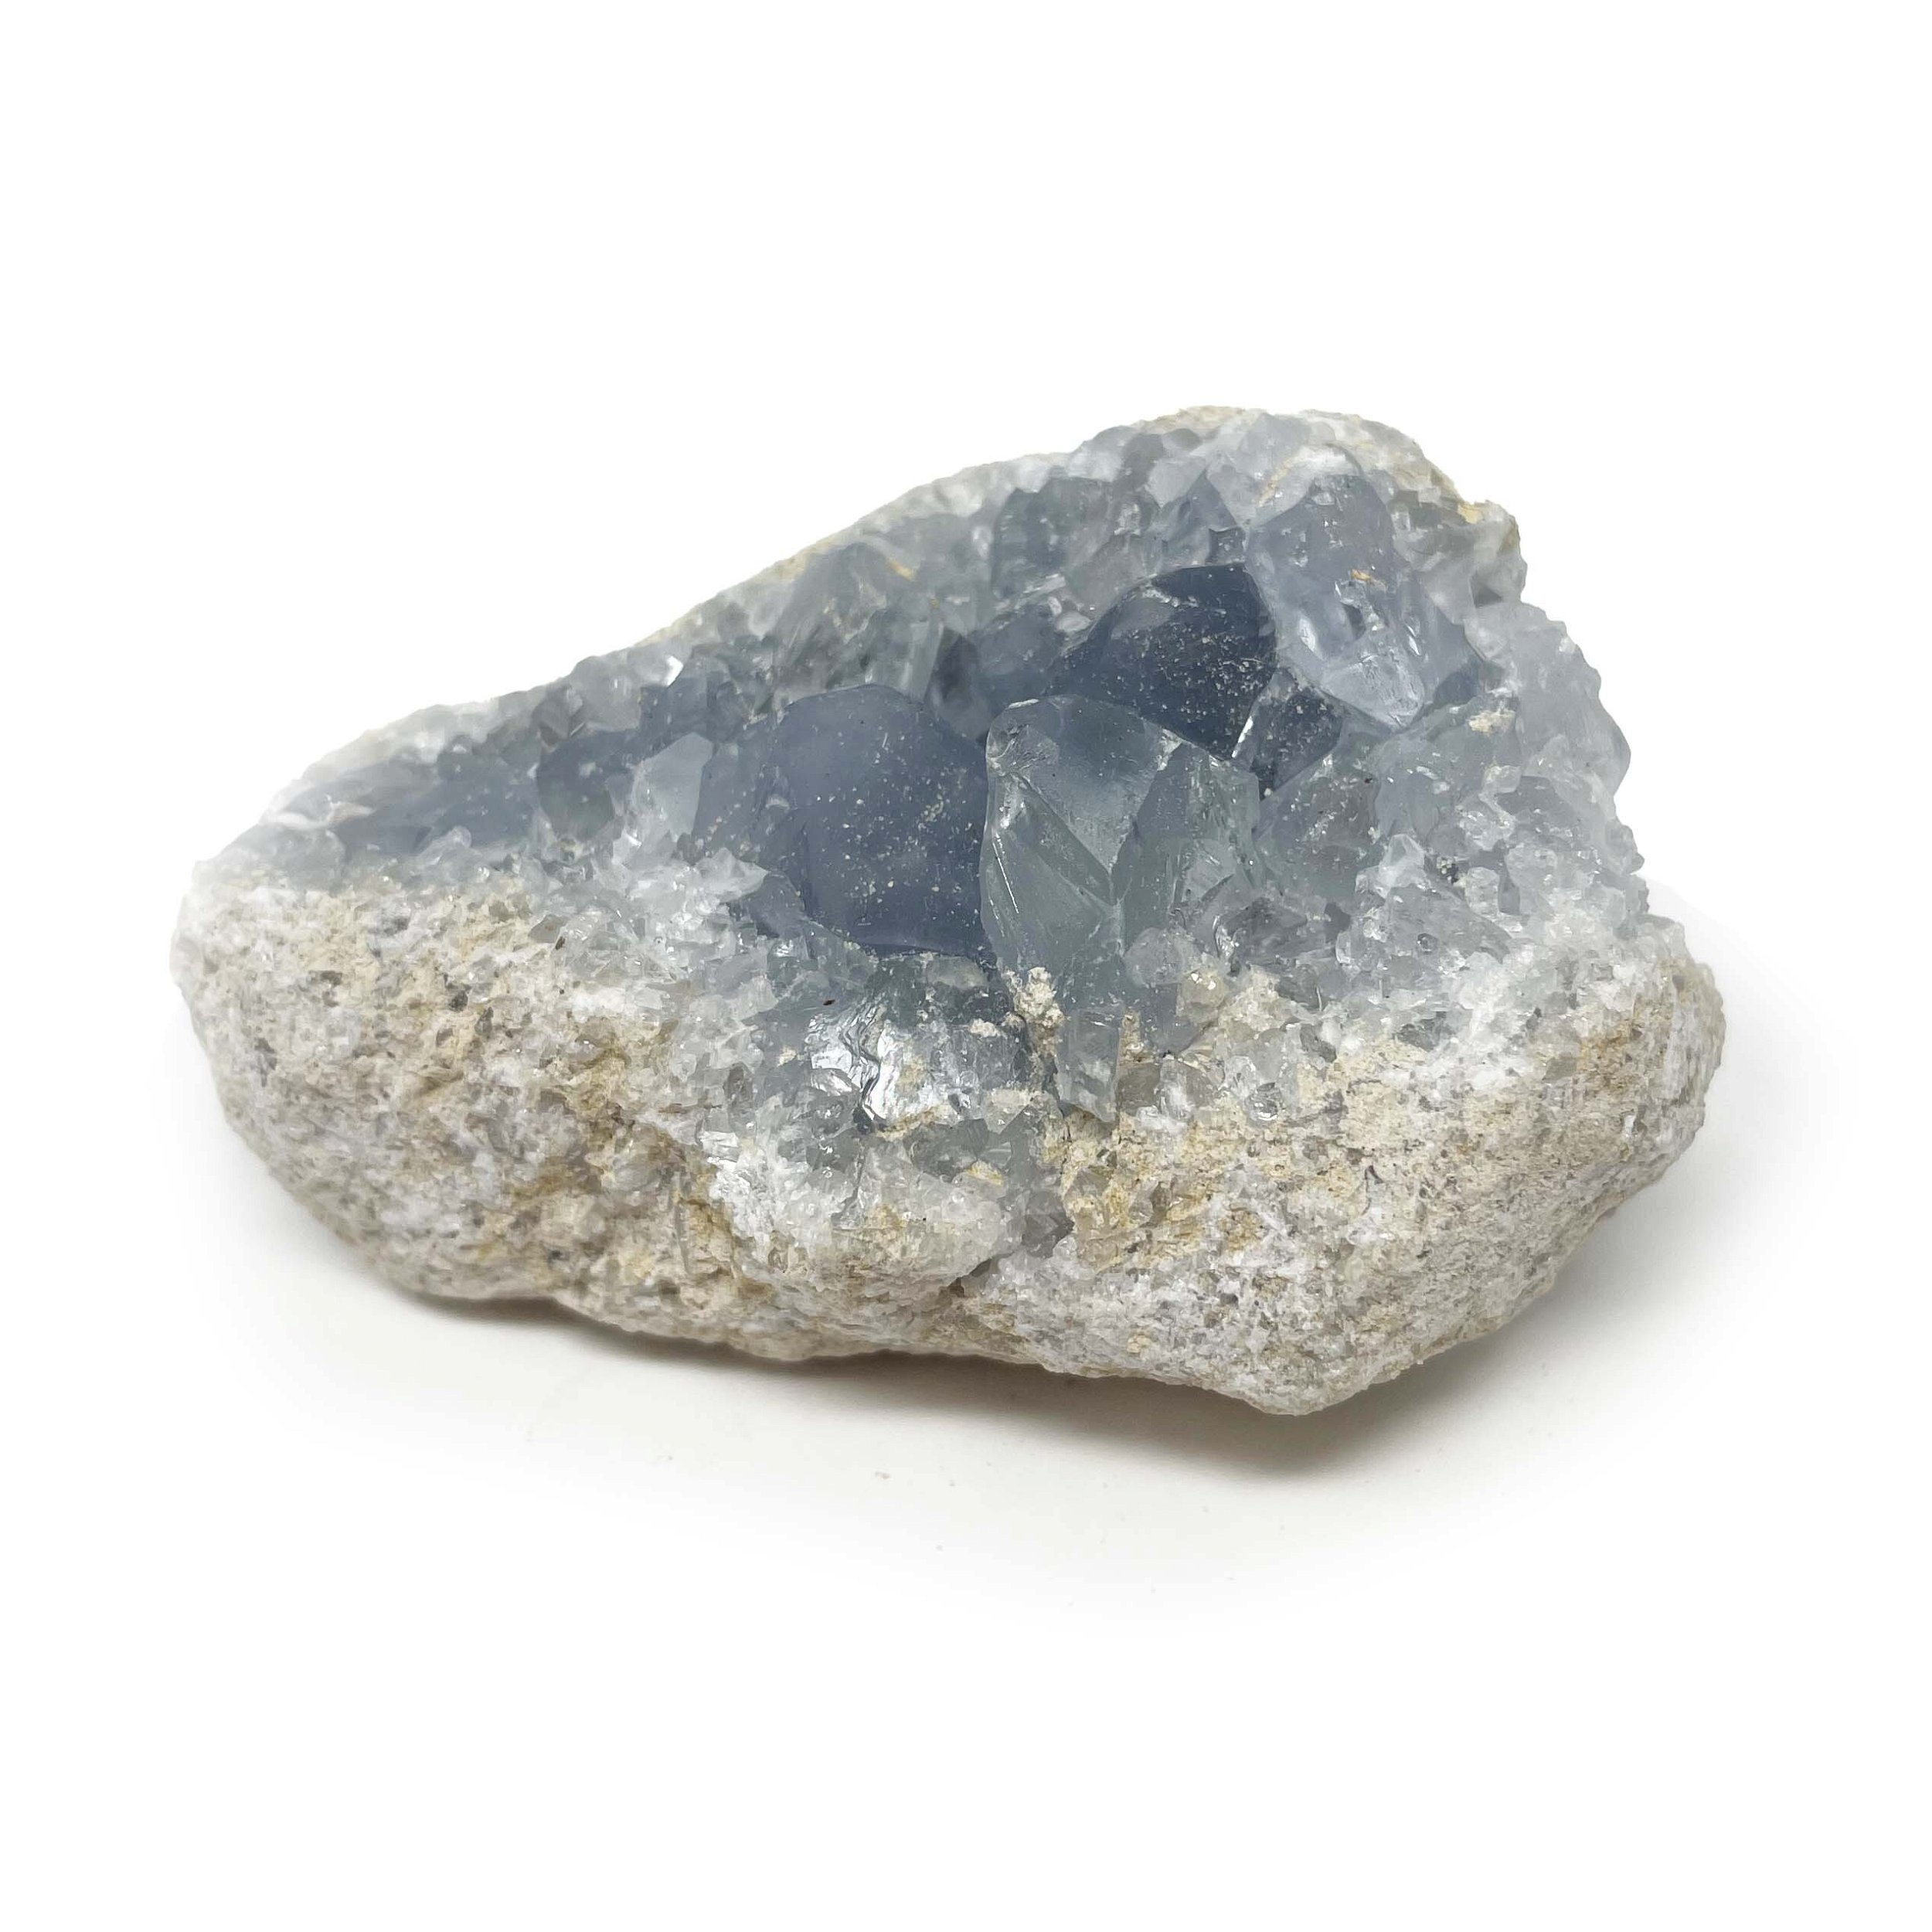 Celestine Geode With Druze Crystals